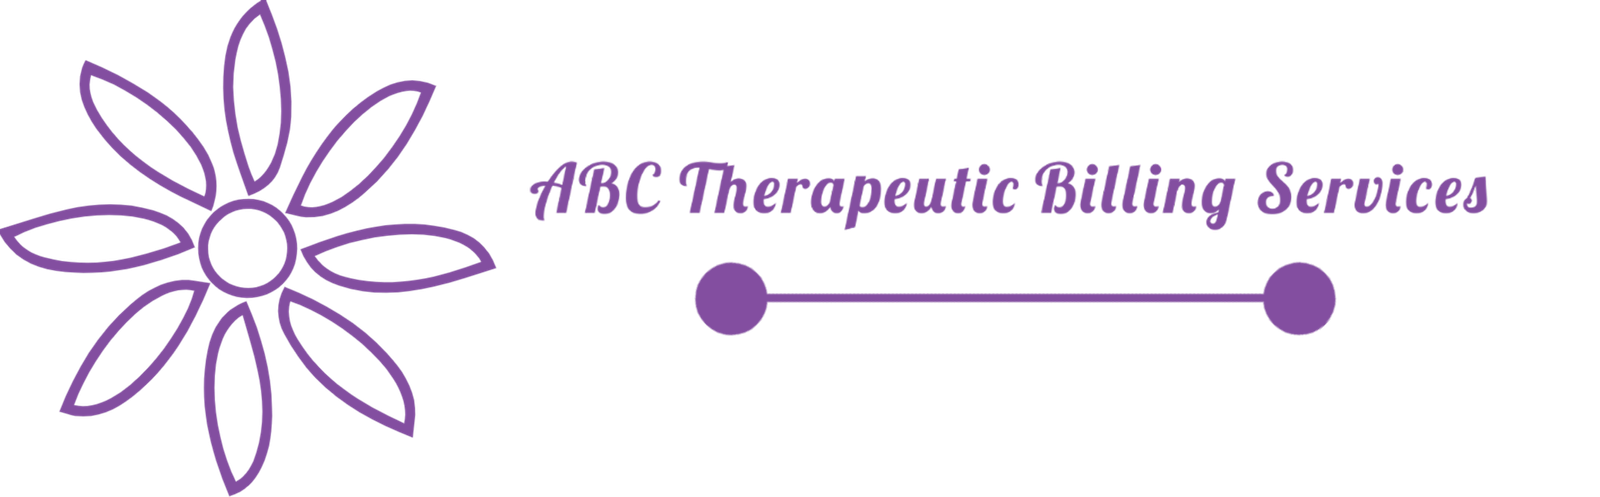 ABC Therapeutic